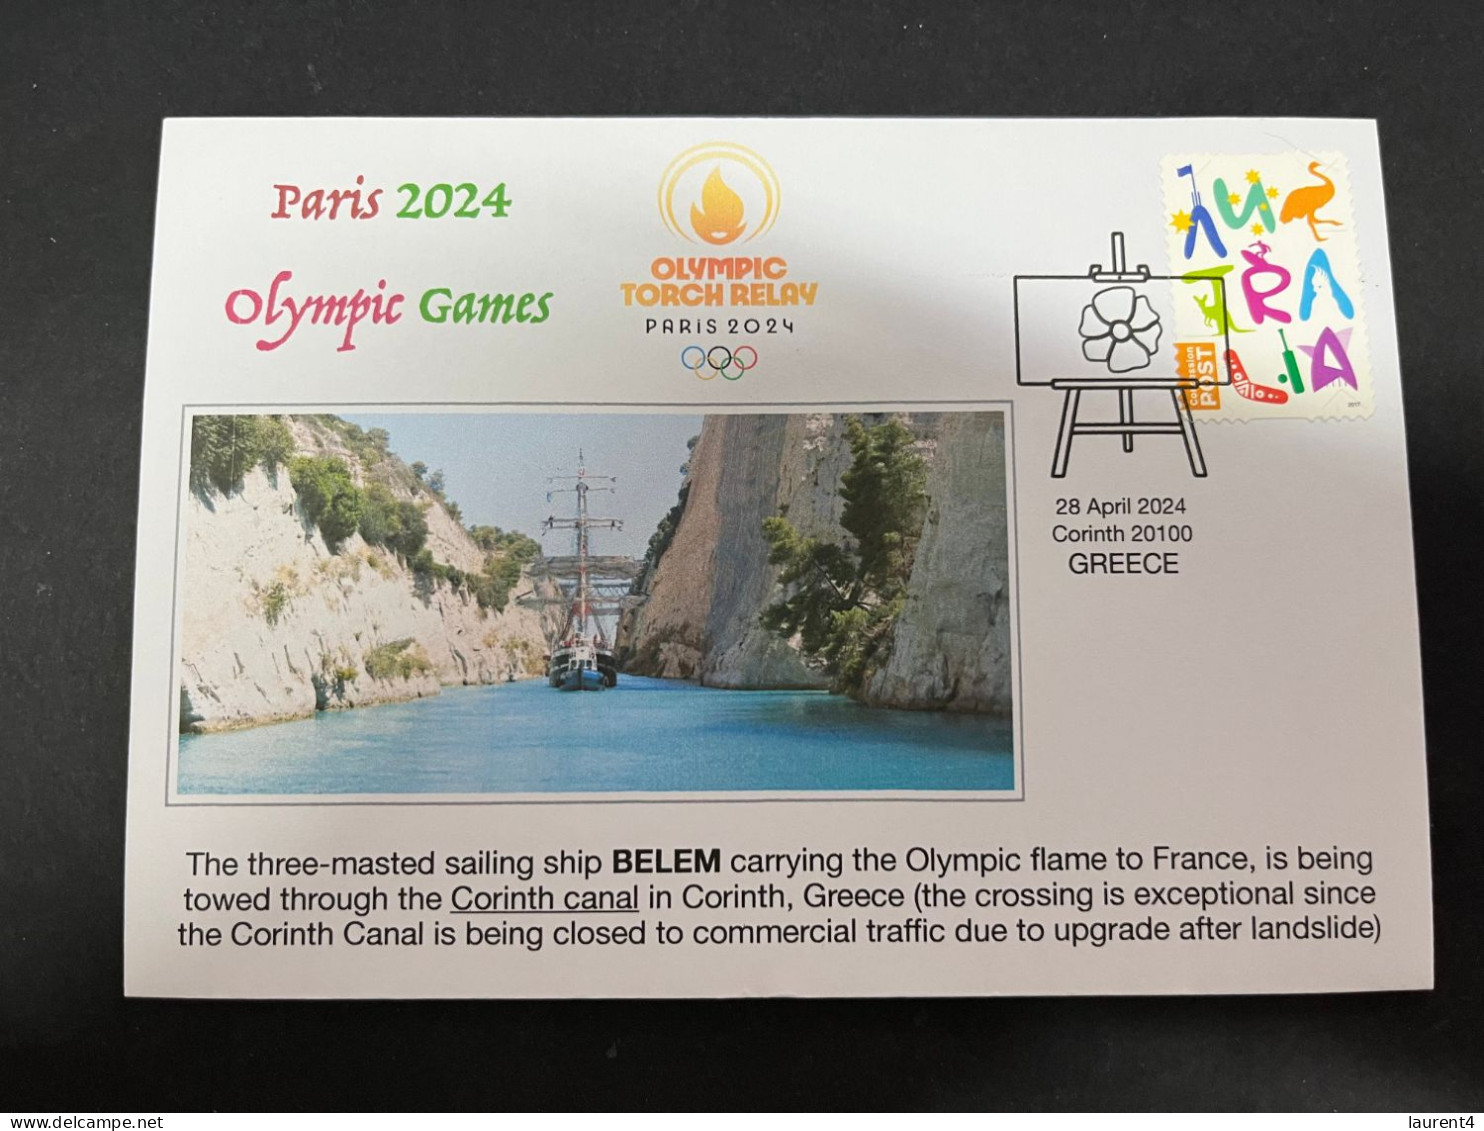 5-5-2024 (4 Z 12 B) Paris Olympic Games 2024 - The Olympic Flame Travel On Sail Ship BELEM Via The Corinth Canal (OZ) - Summer 2024: Paris